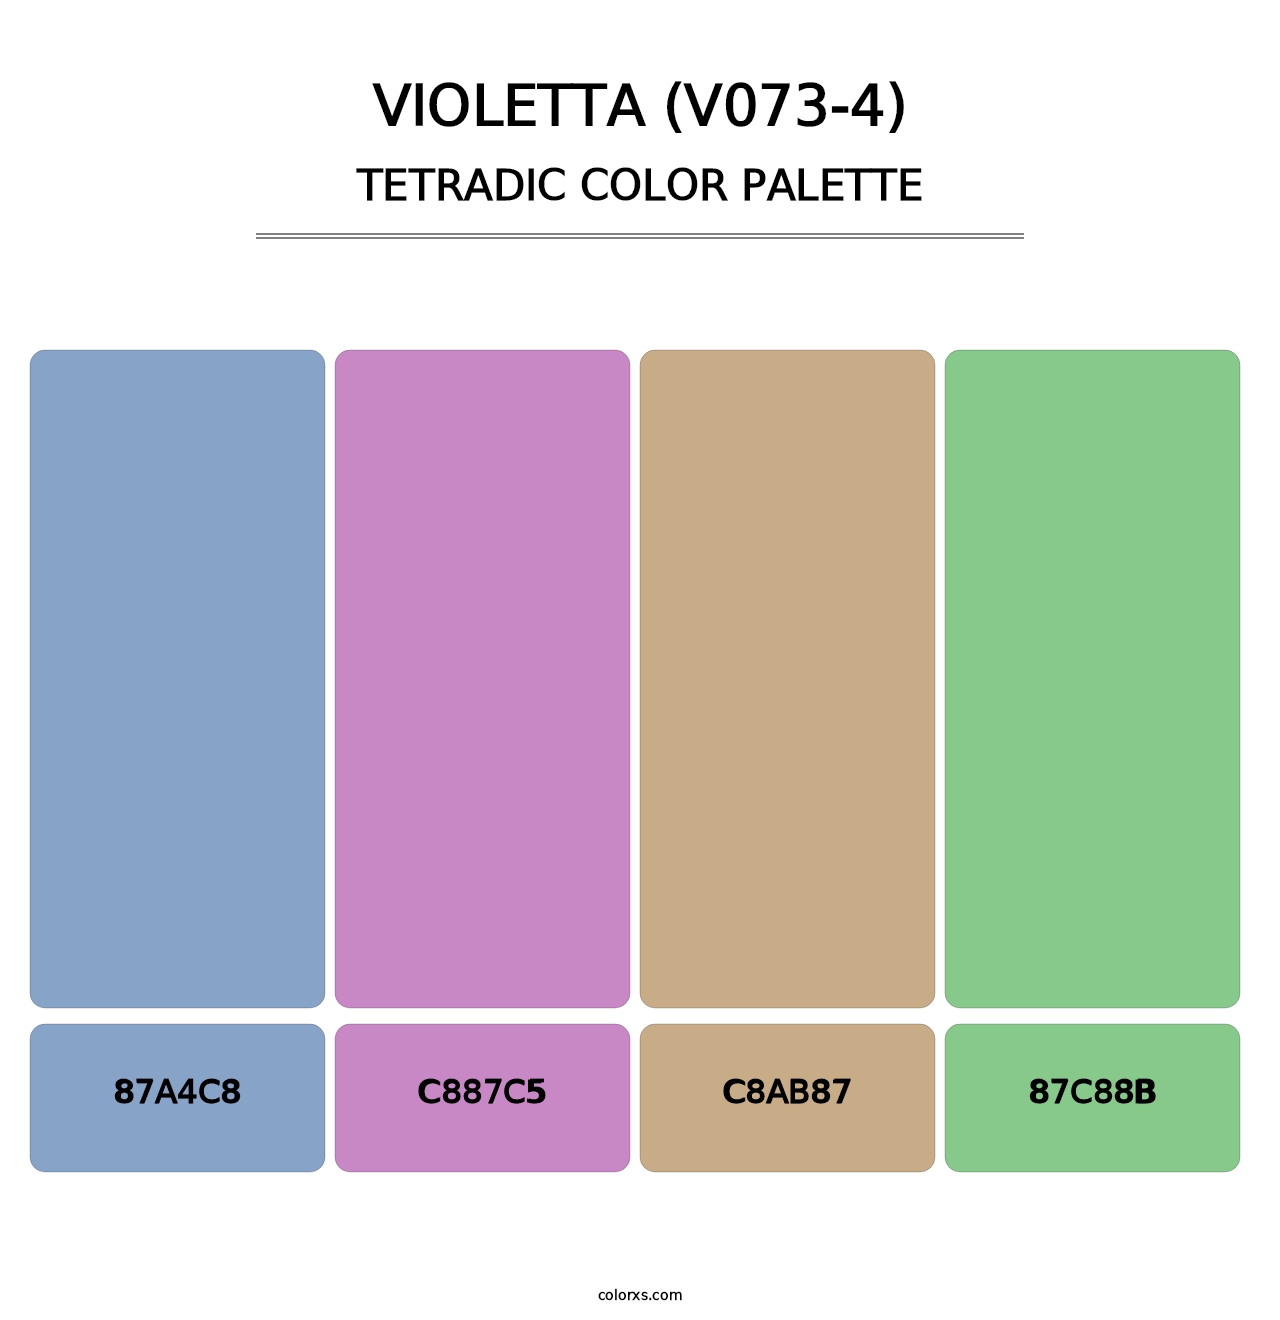 Violetta (V073-4) - Tetradic Color Palette